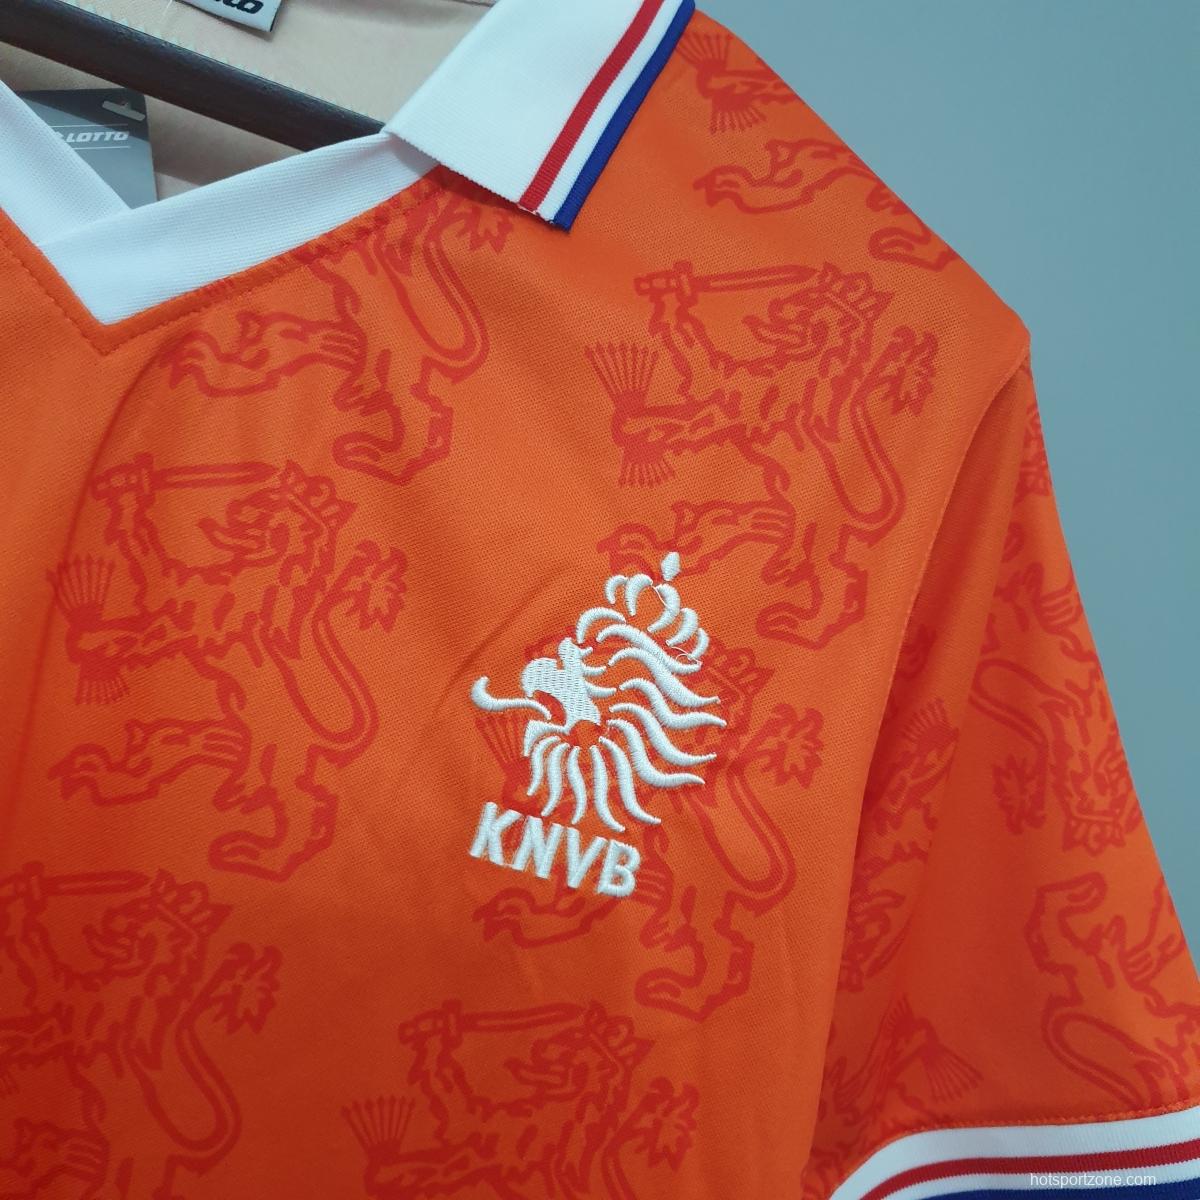 Netherlands 1995 retro shirt home Soccer Jersey